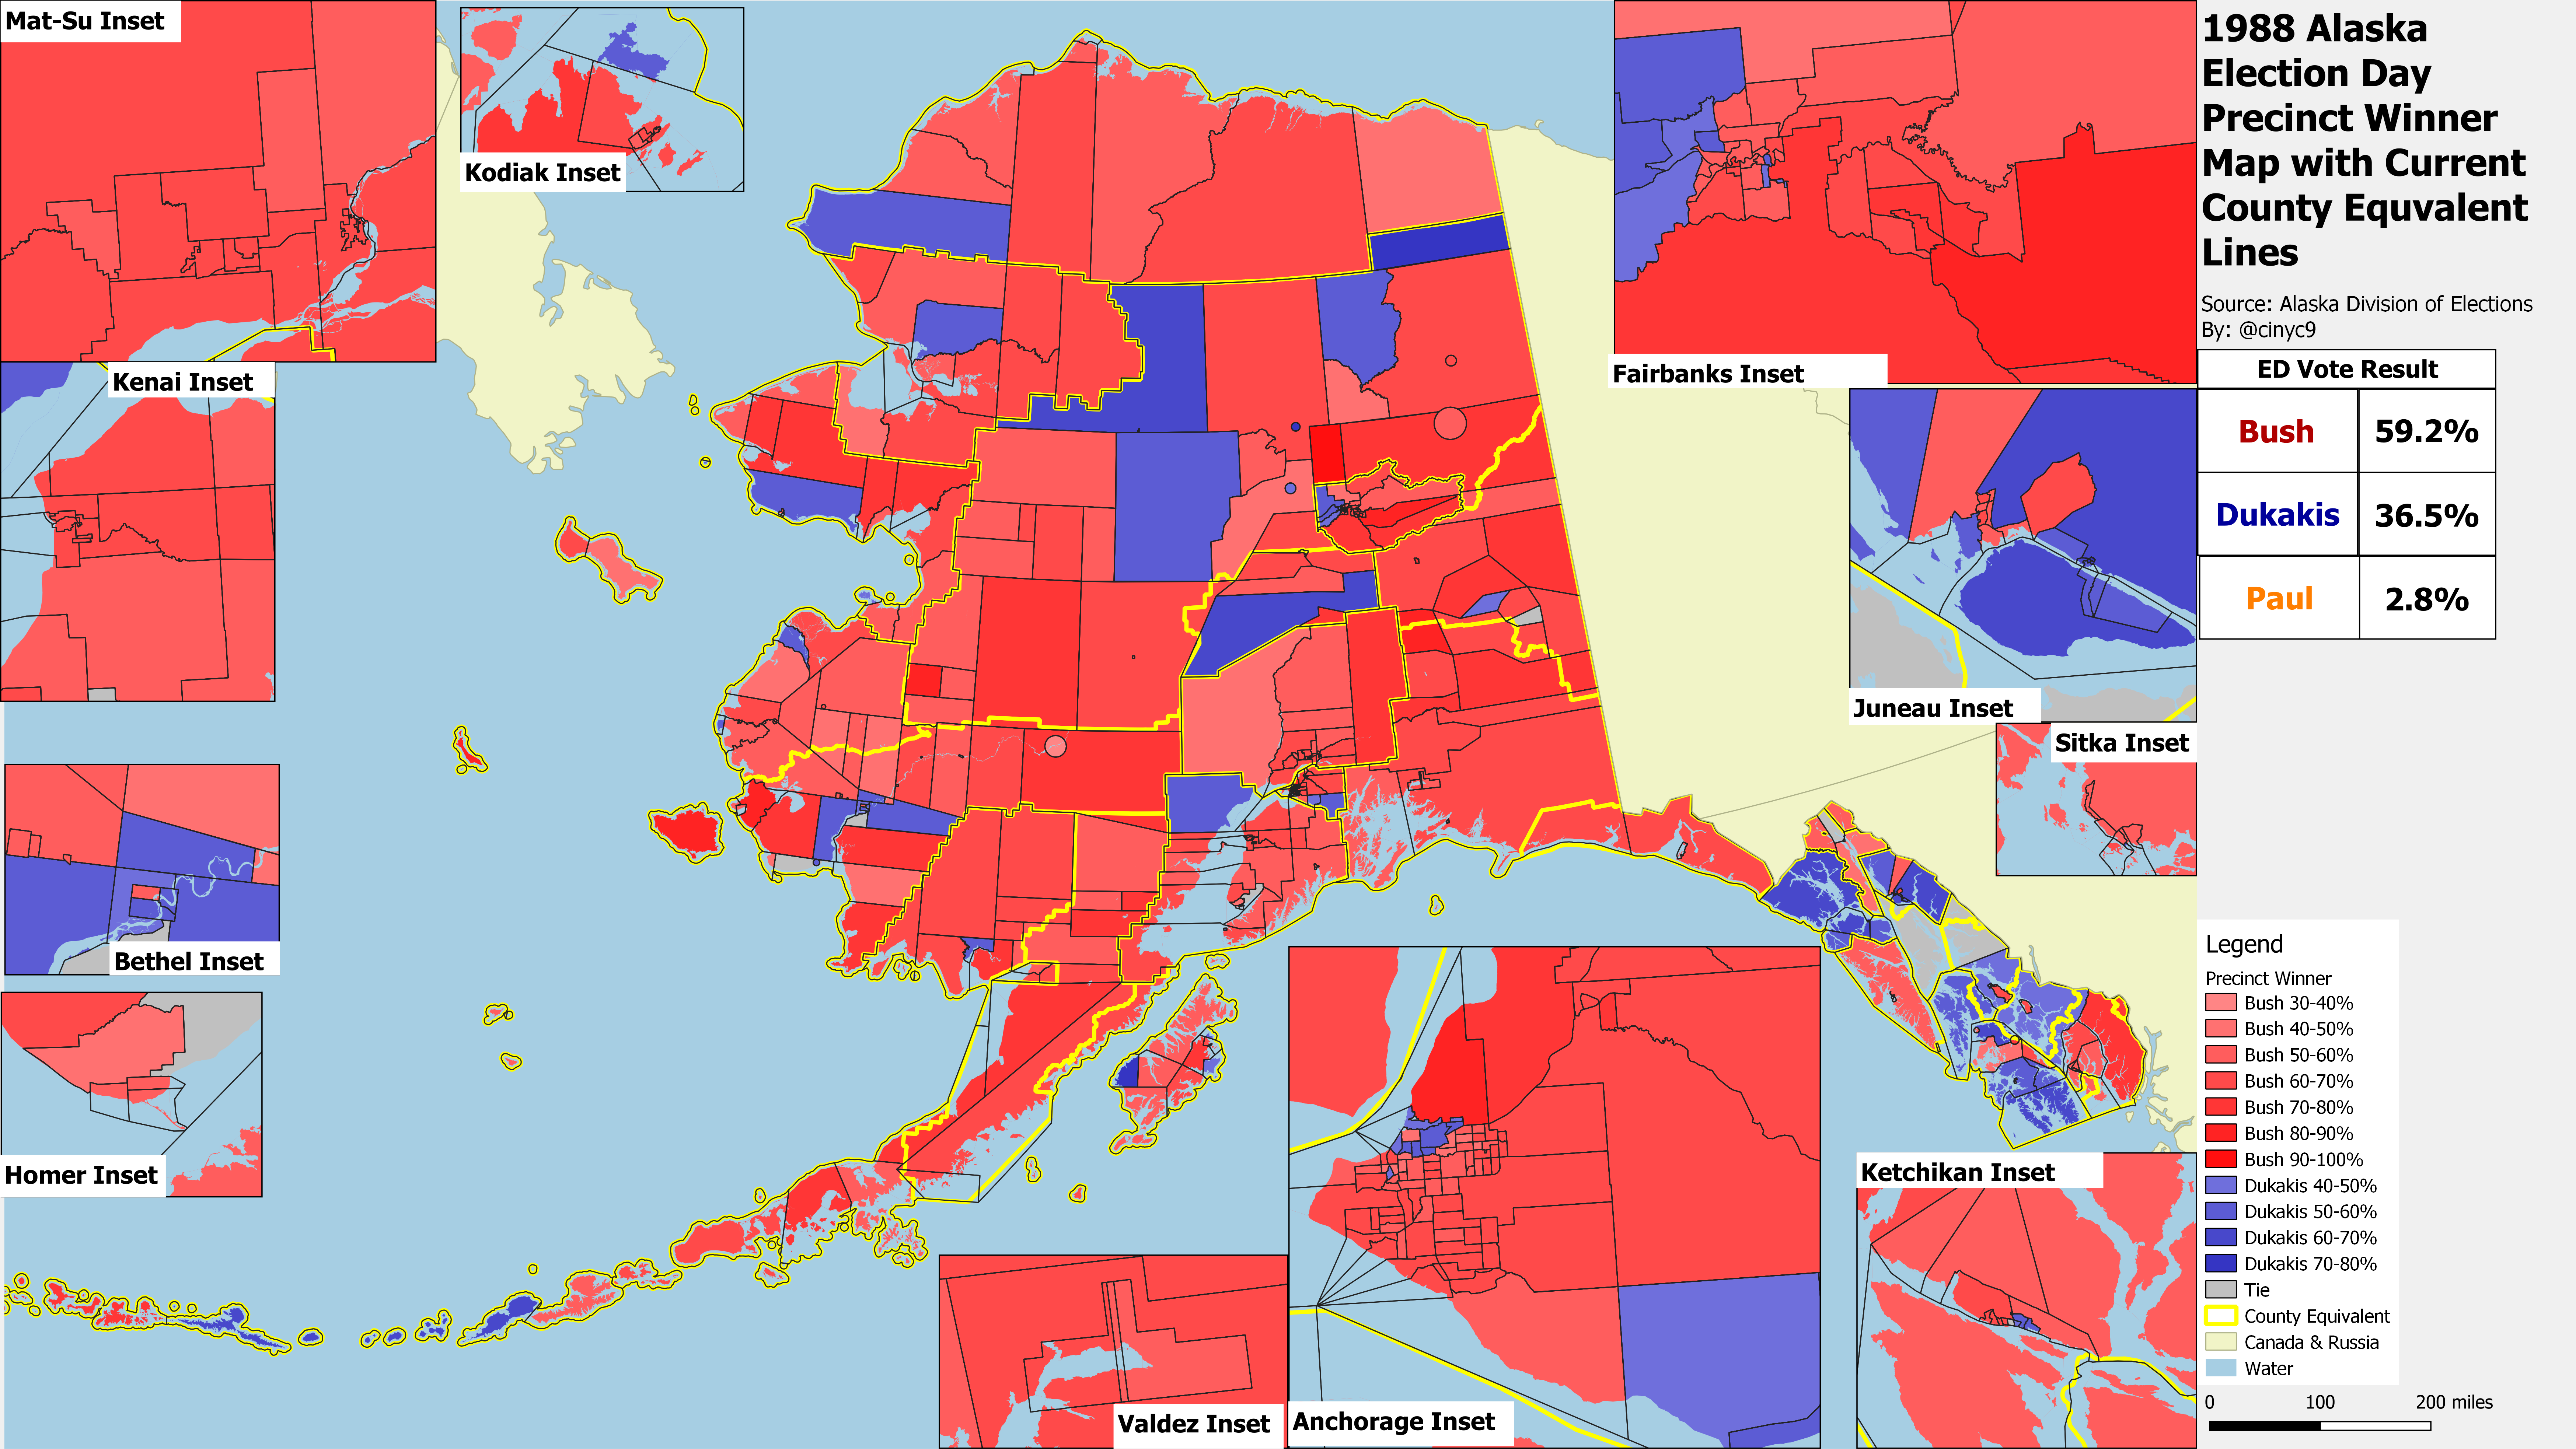 Alaska 1988 Election Day Precinct Winner Map